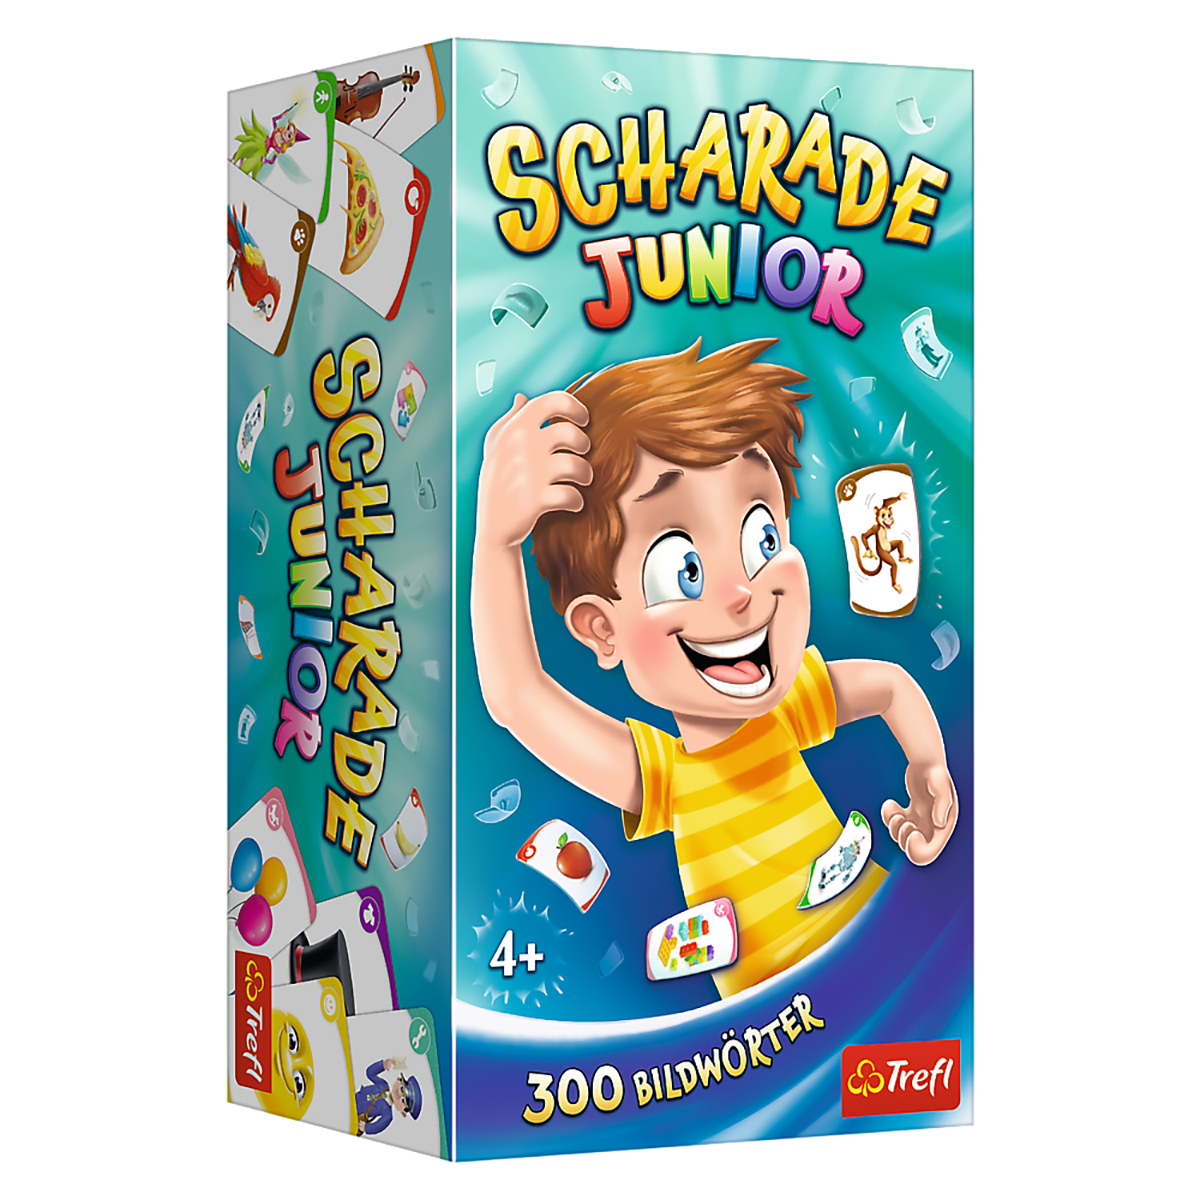 TREFL SCHARADE JUNIOR Game